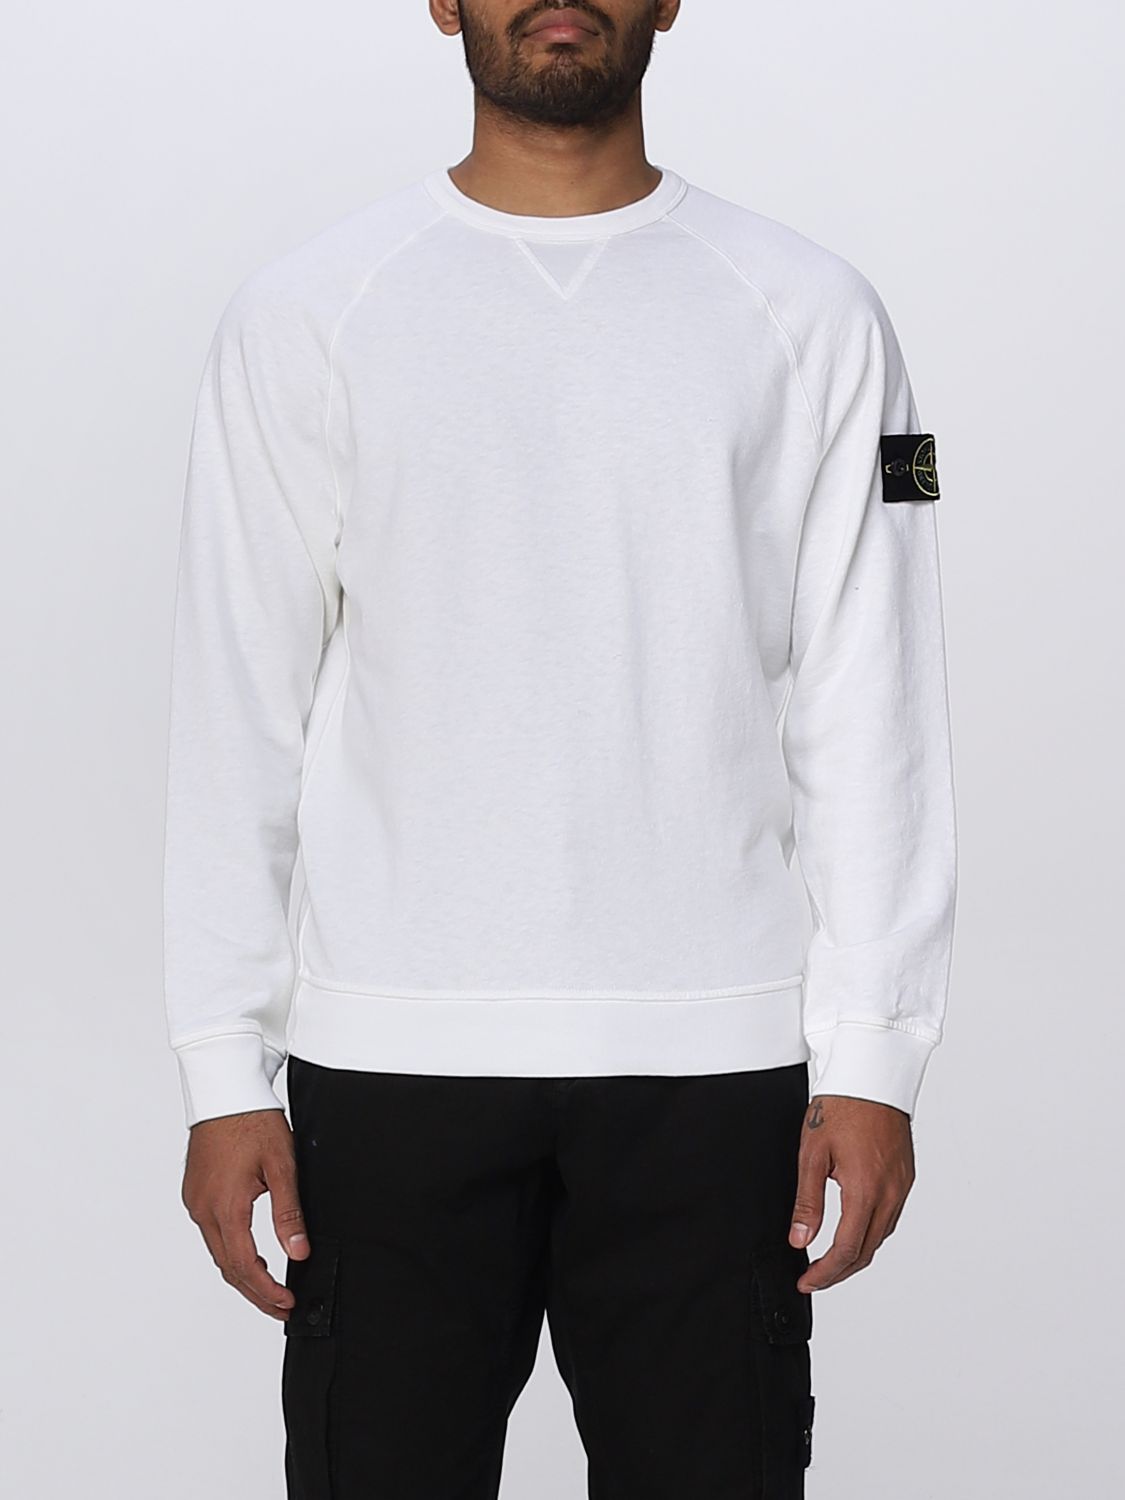 achtergrond vrede Edele STONE ISLAND: sweatshirt for man - White | Stone Island sweatshirt  781566360 online on GIGLIO.COM